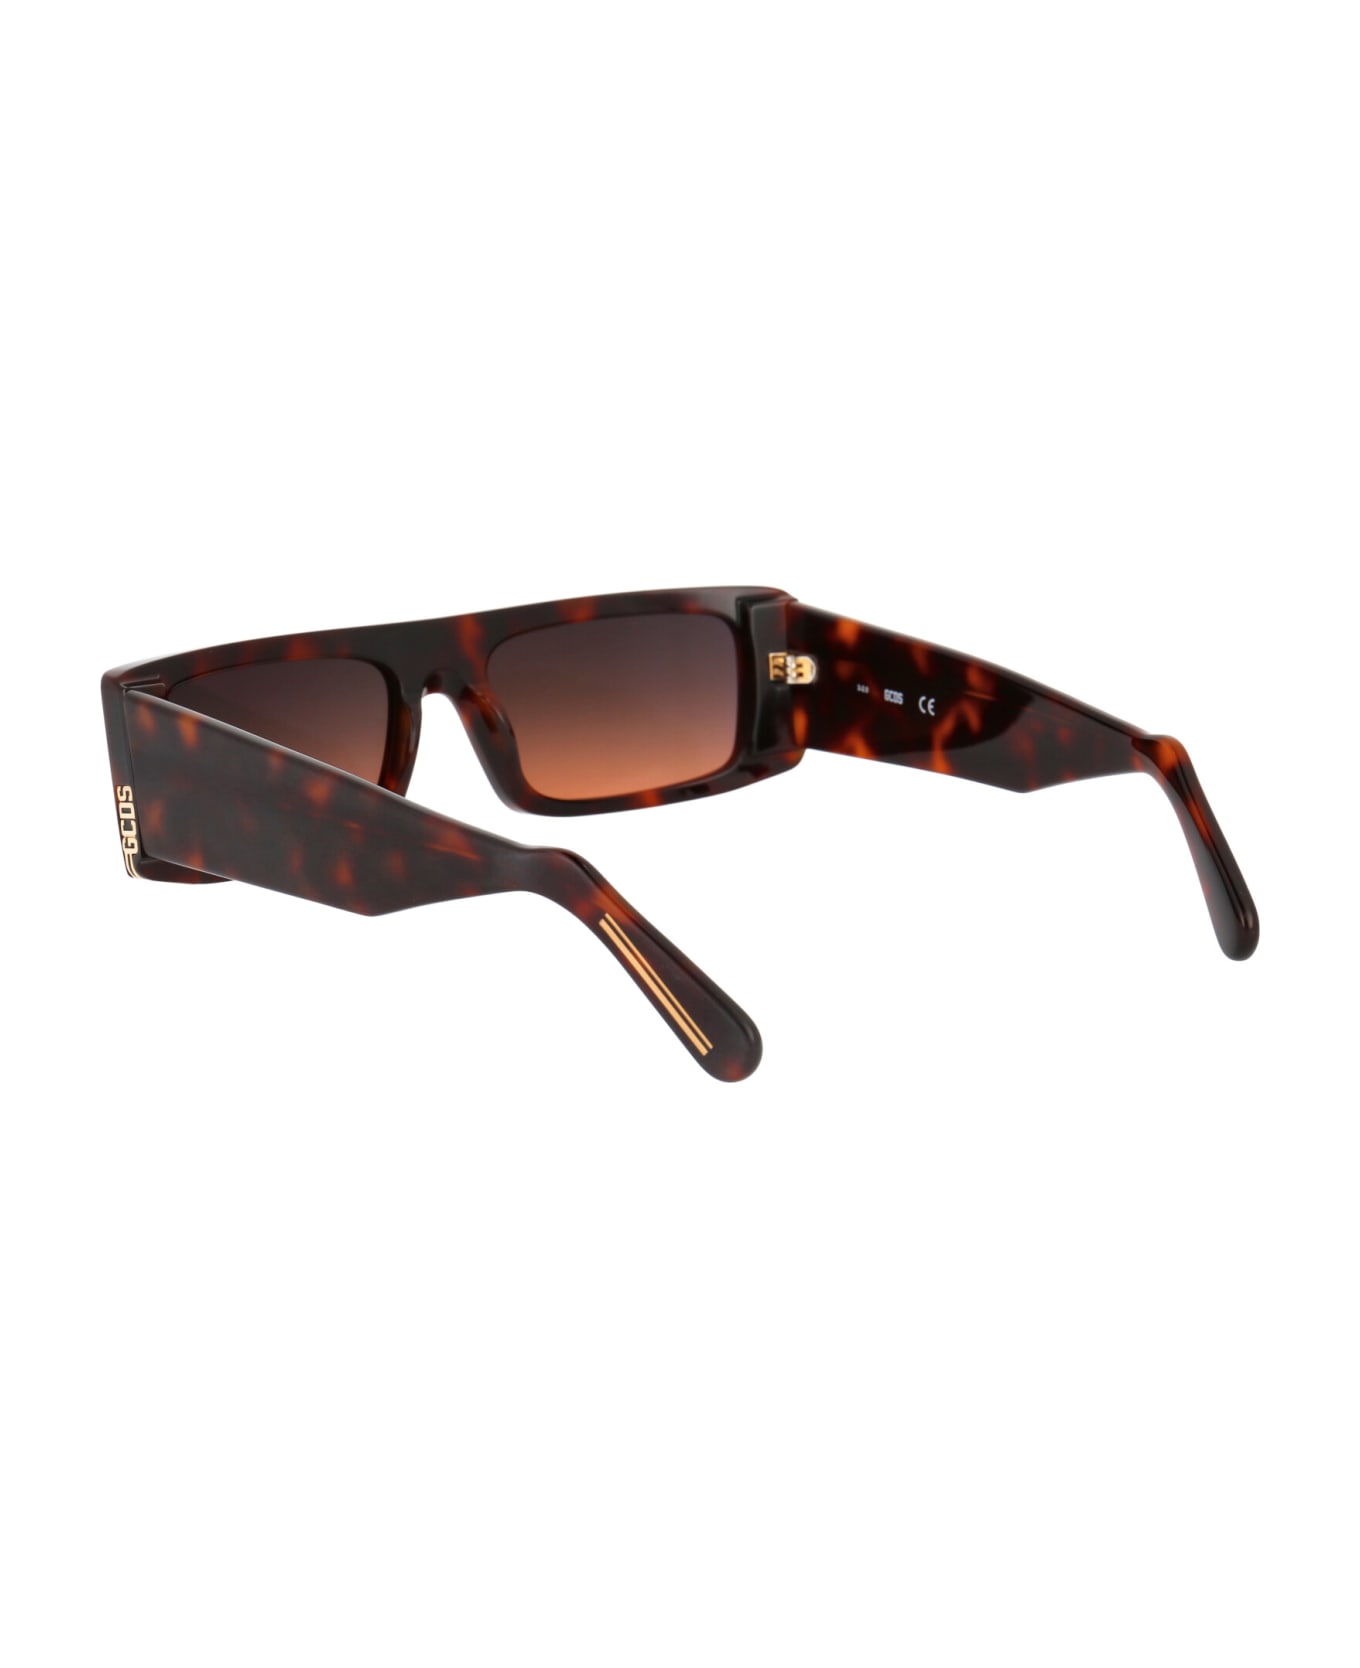 GCDS Gd0009 Sunglasses - 52B Avana Scura/Fumo Grad サングラス